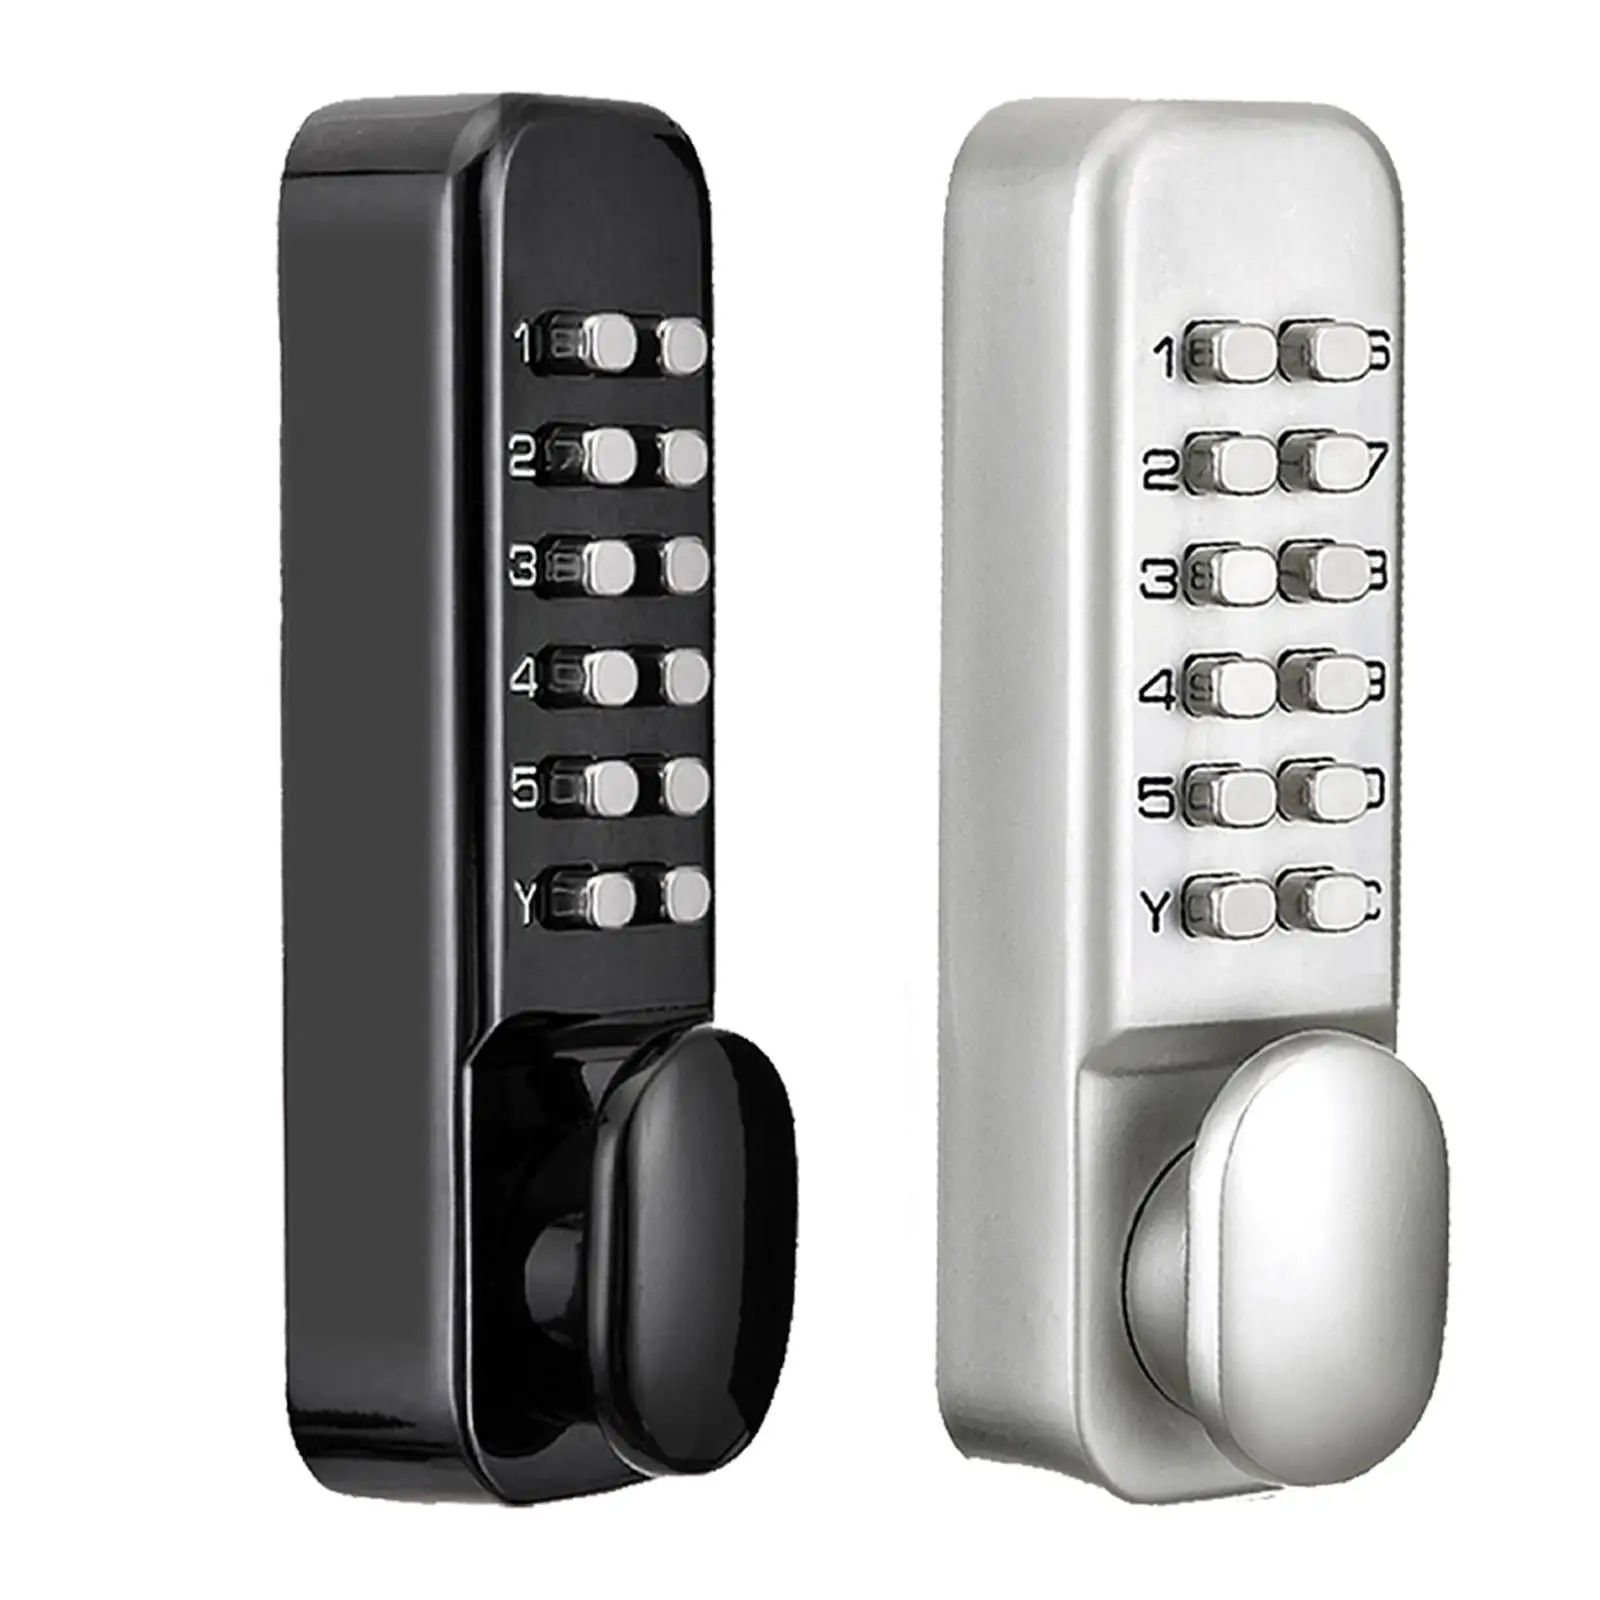 Keyless Mechanical Door Lock Push Button Combination Lock with Keypads Waterproof Locks for Front Entrance Bedroom